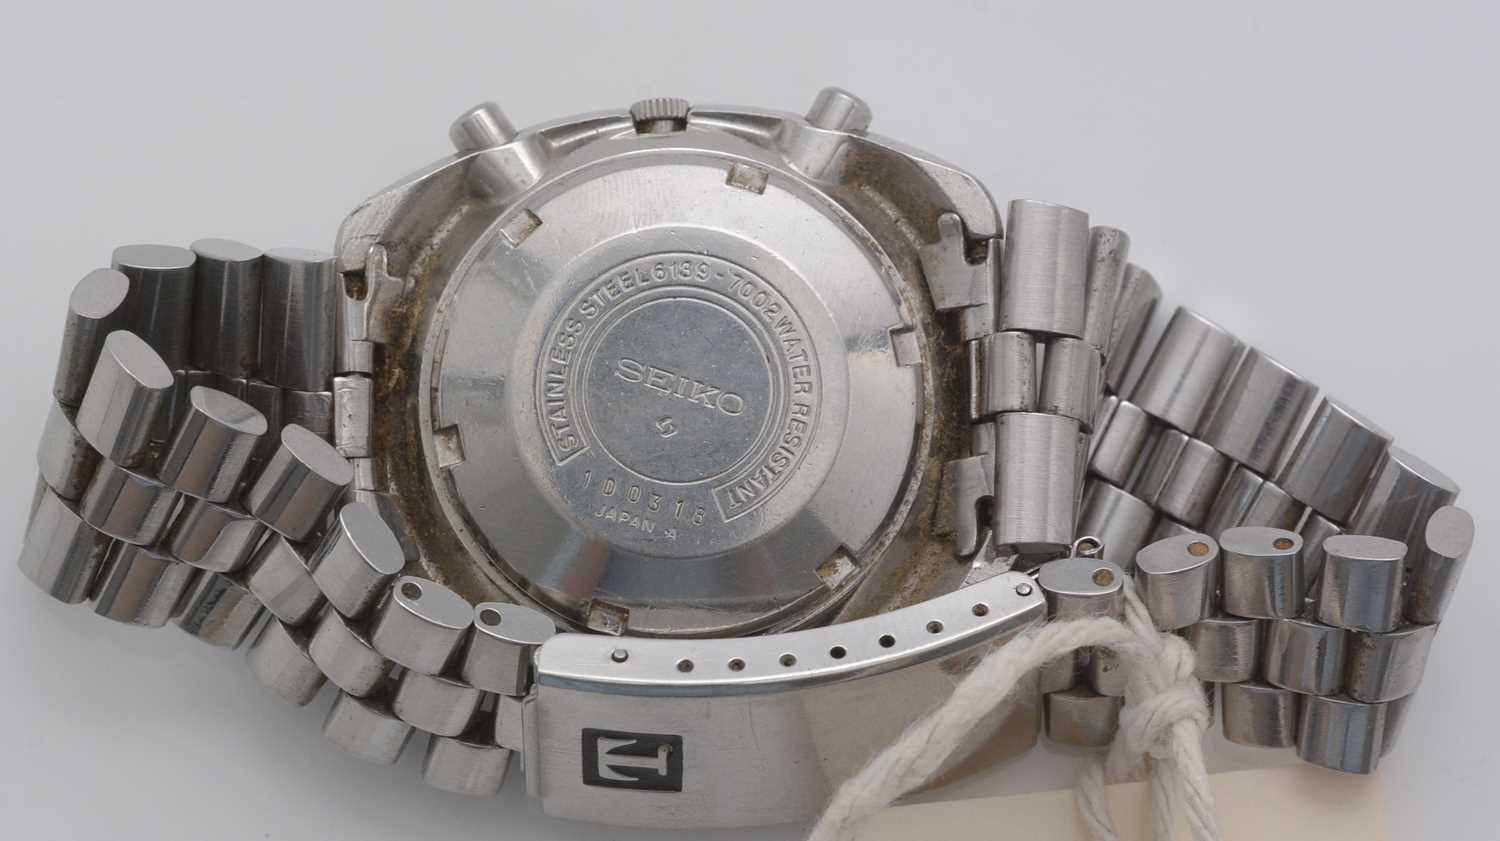 Seiko chronograph wristwatch. - Image 4 of 4